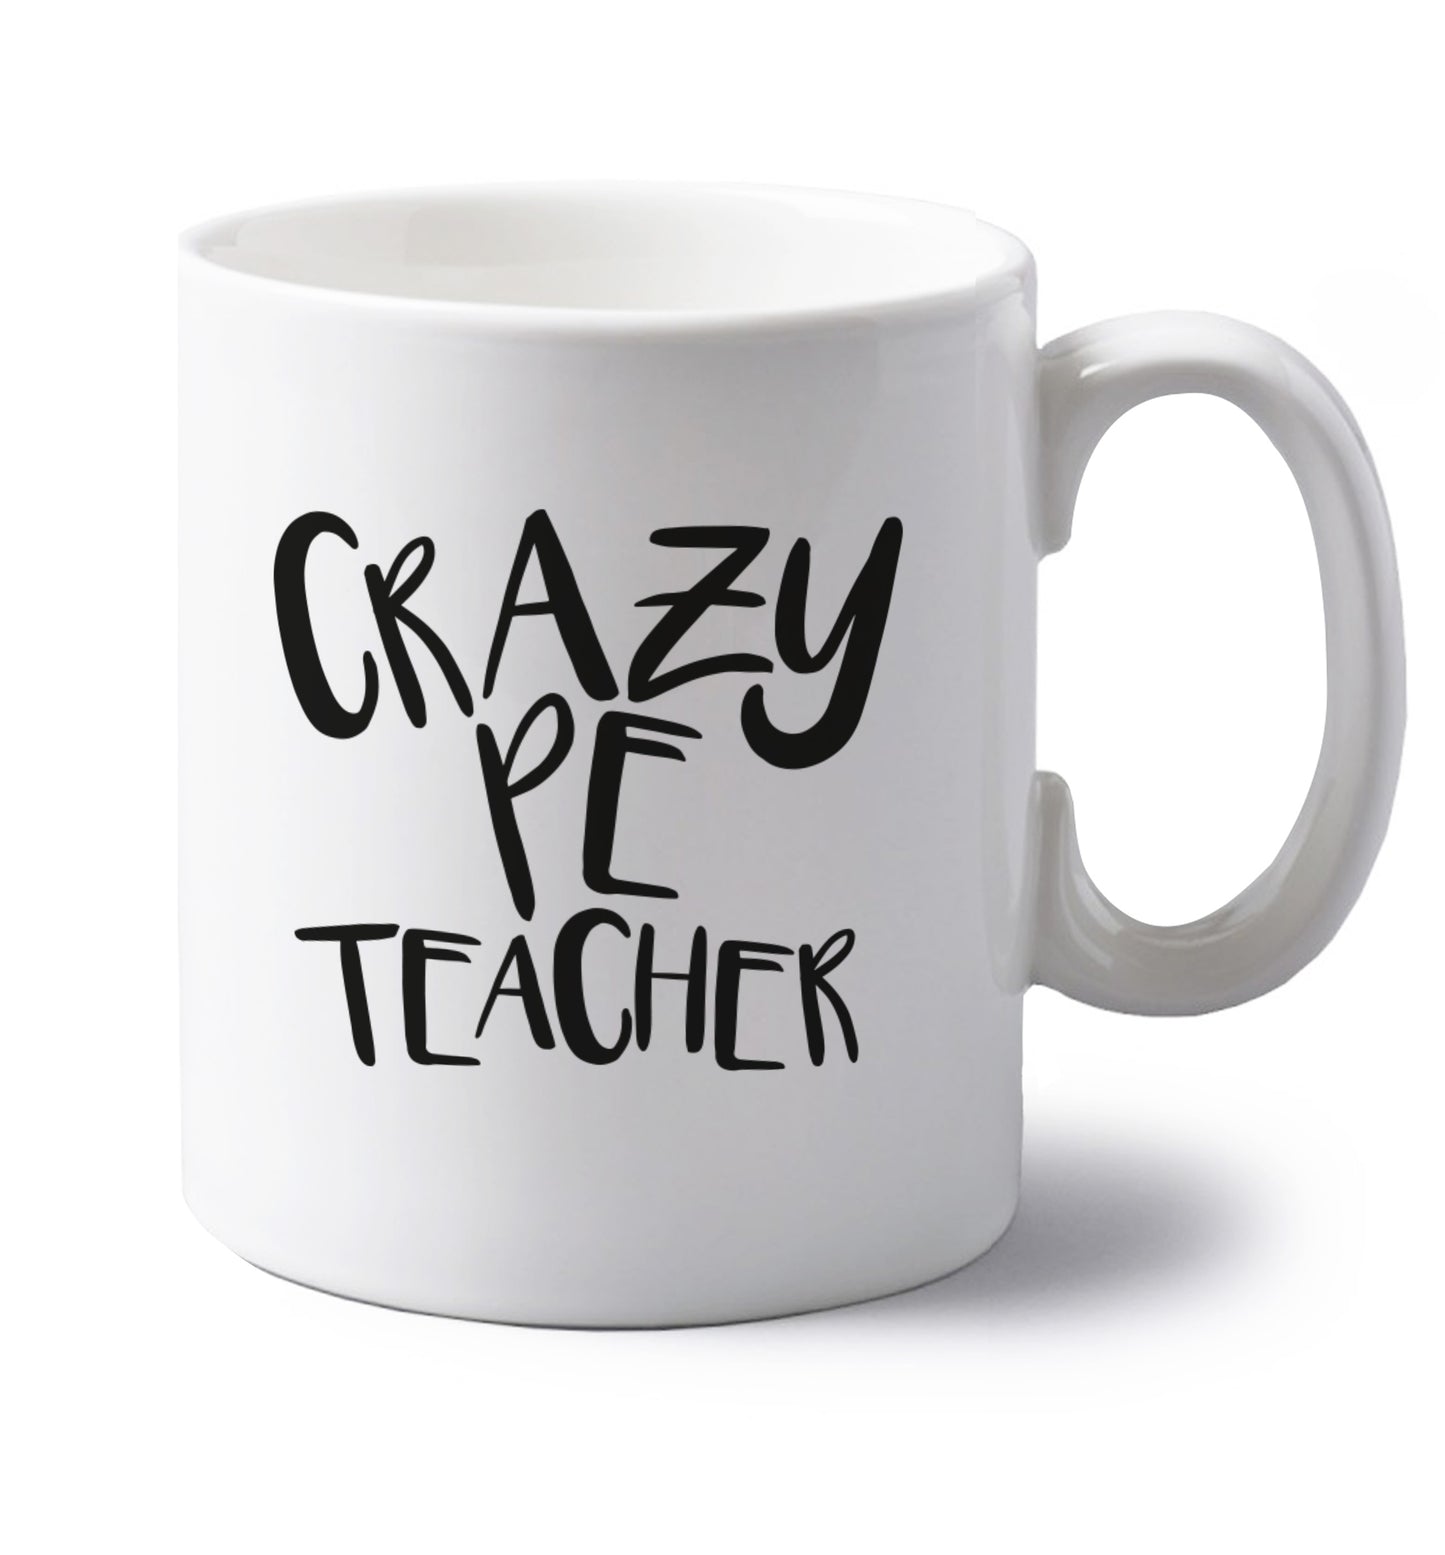 Crazy PE teacher left handed white ceramic mug 